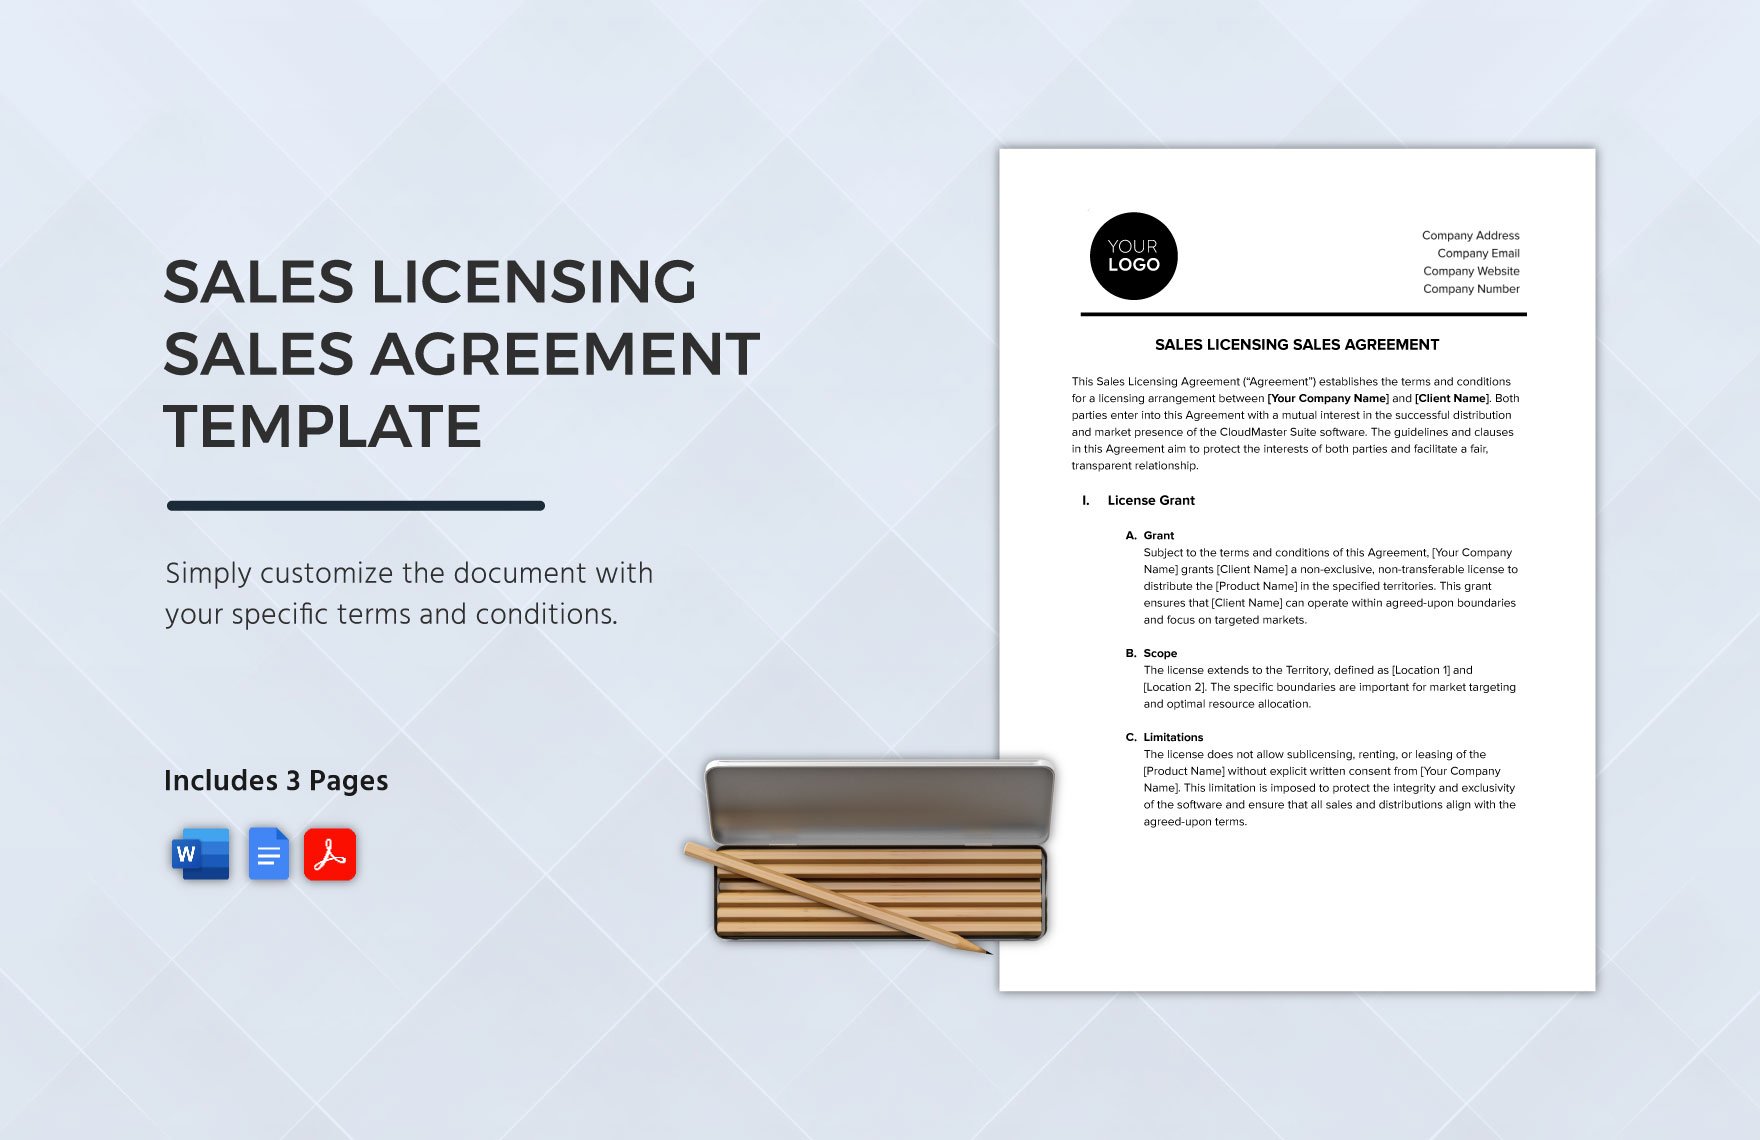 Sales Licensing Sales Agreement Template